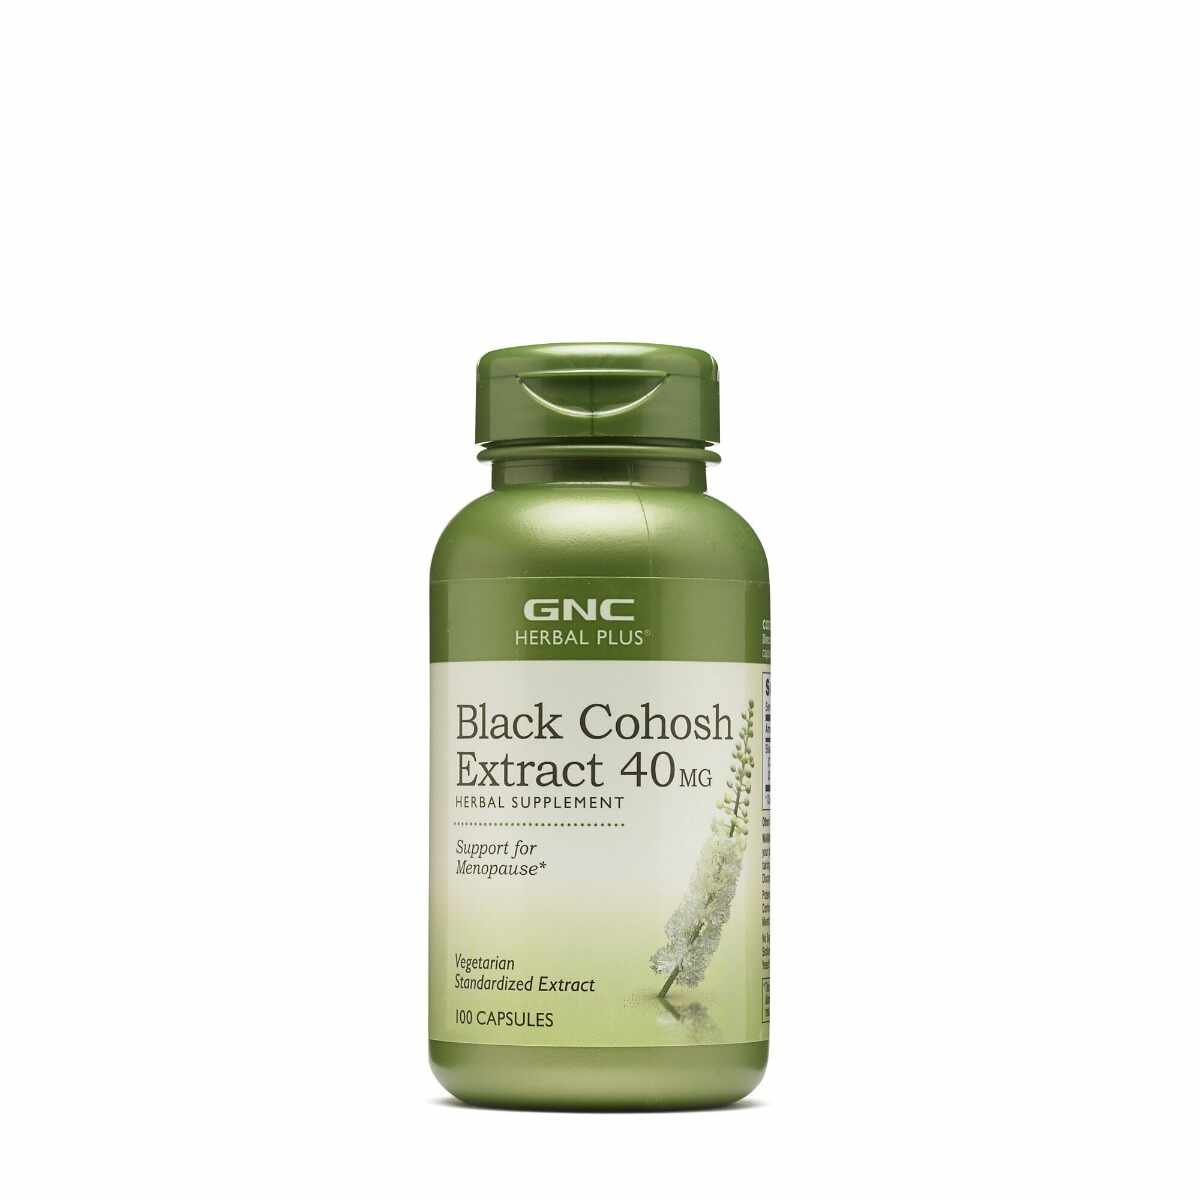 Extract standardizat de Cohos Negru Black Cohosh 40 mg Herbal Plus, 100 capsule, GNC